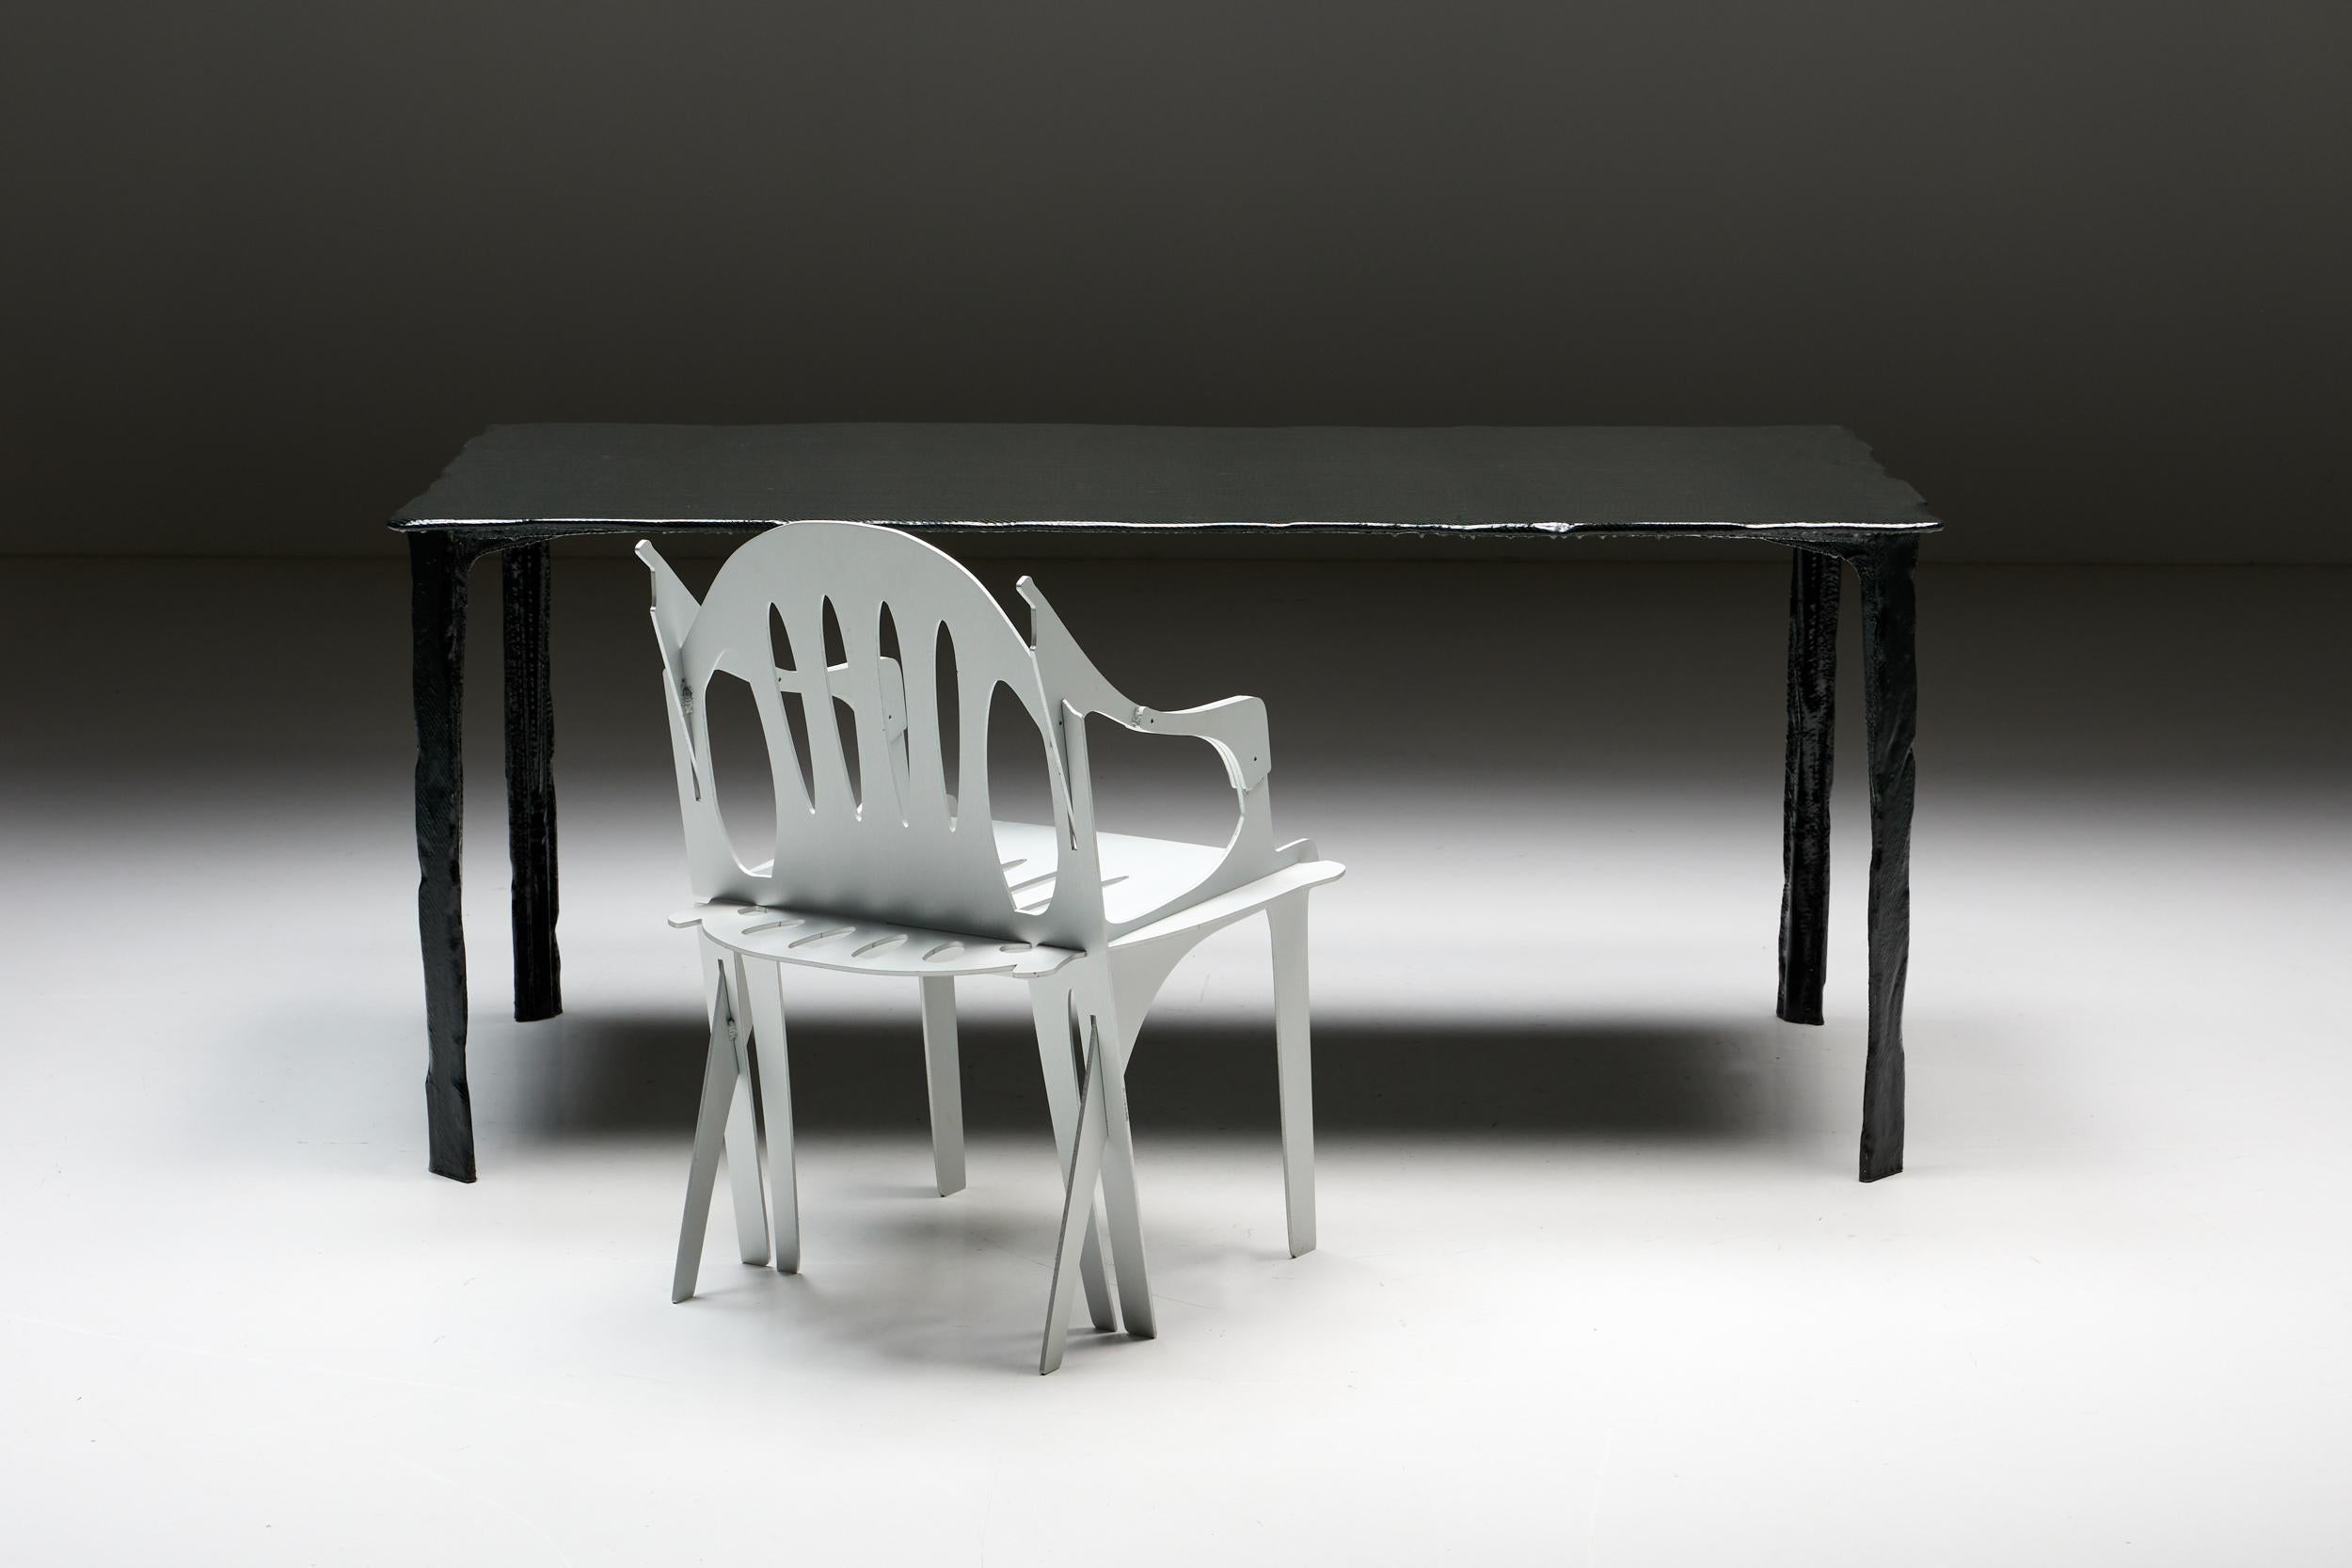 Carbon Table; Schimmel & Schweikle; Aluminium; Carbon Fibre; Epoxy; Modern Design; Technology; Art; Culture.

Table designed by Schimmel & Schweikle, crafted from a combination of lightweight and durable aluminium, carbon fibre and epoxy. The